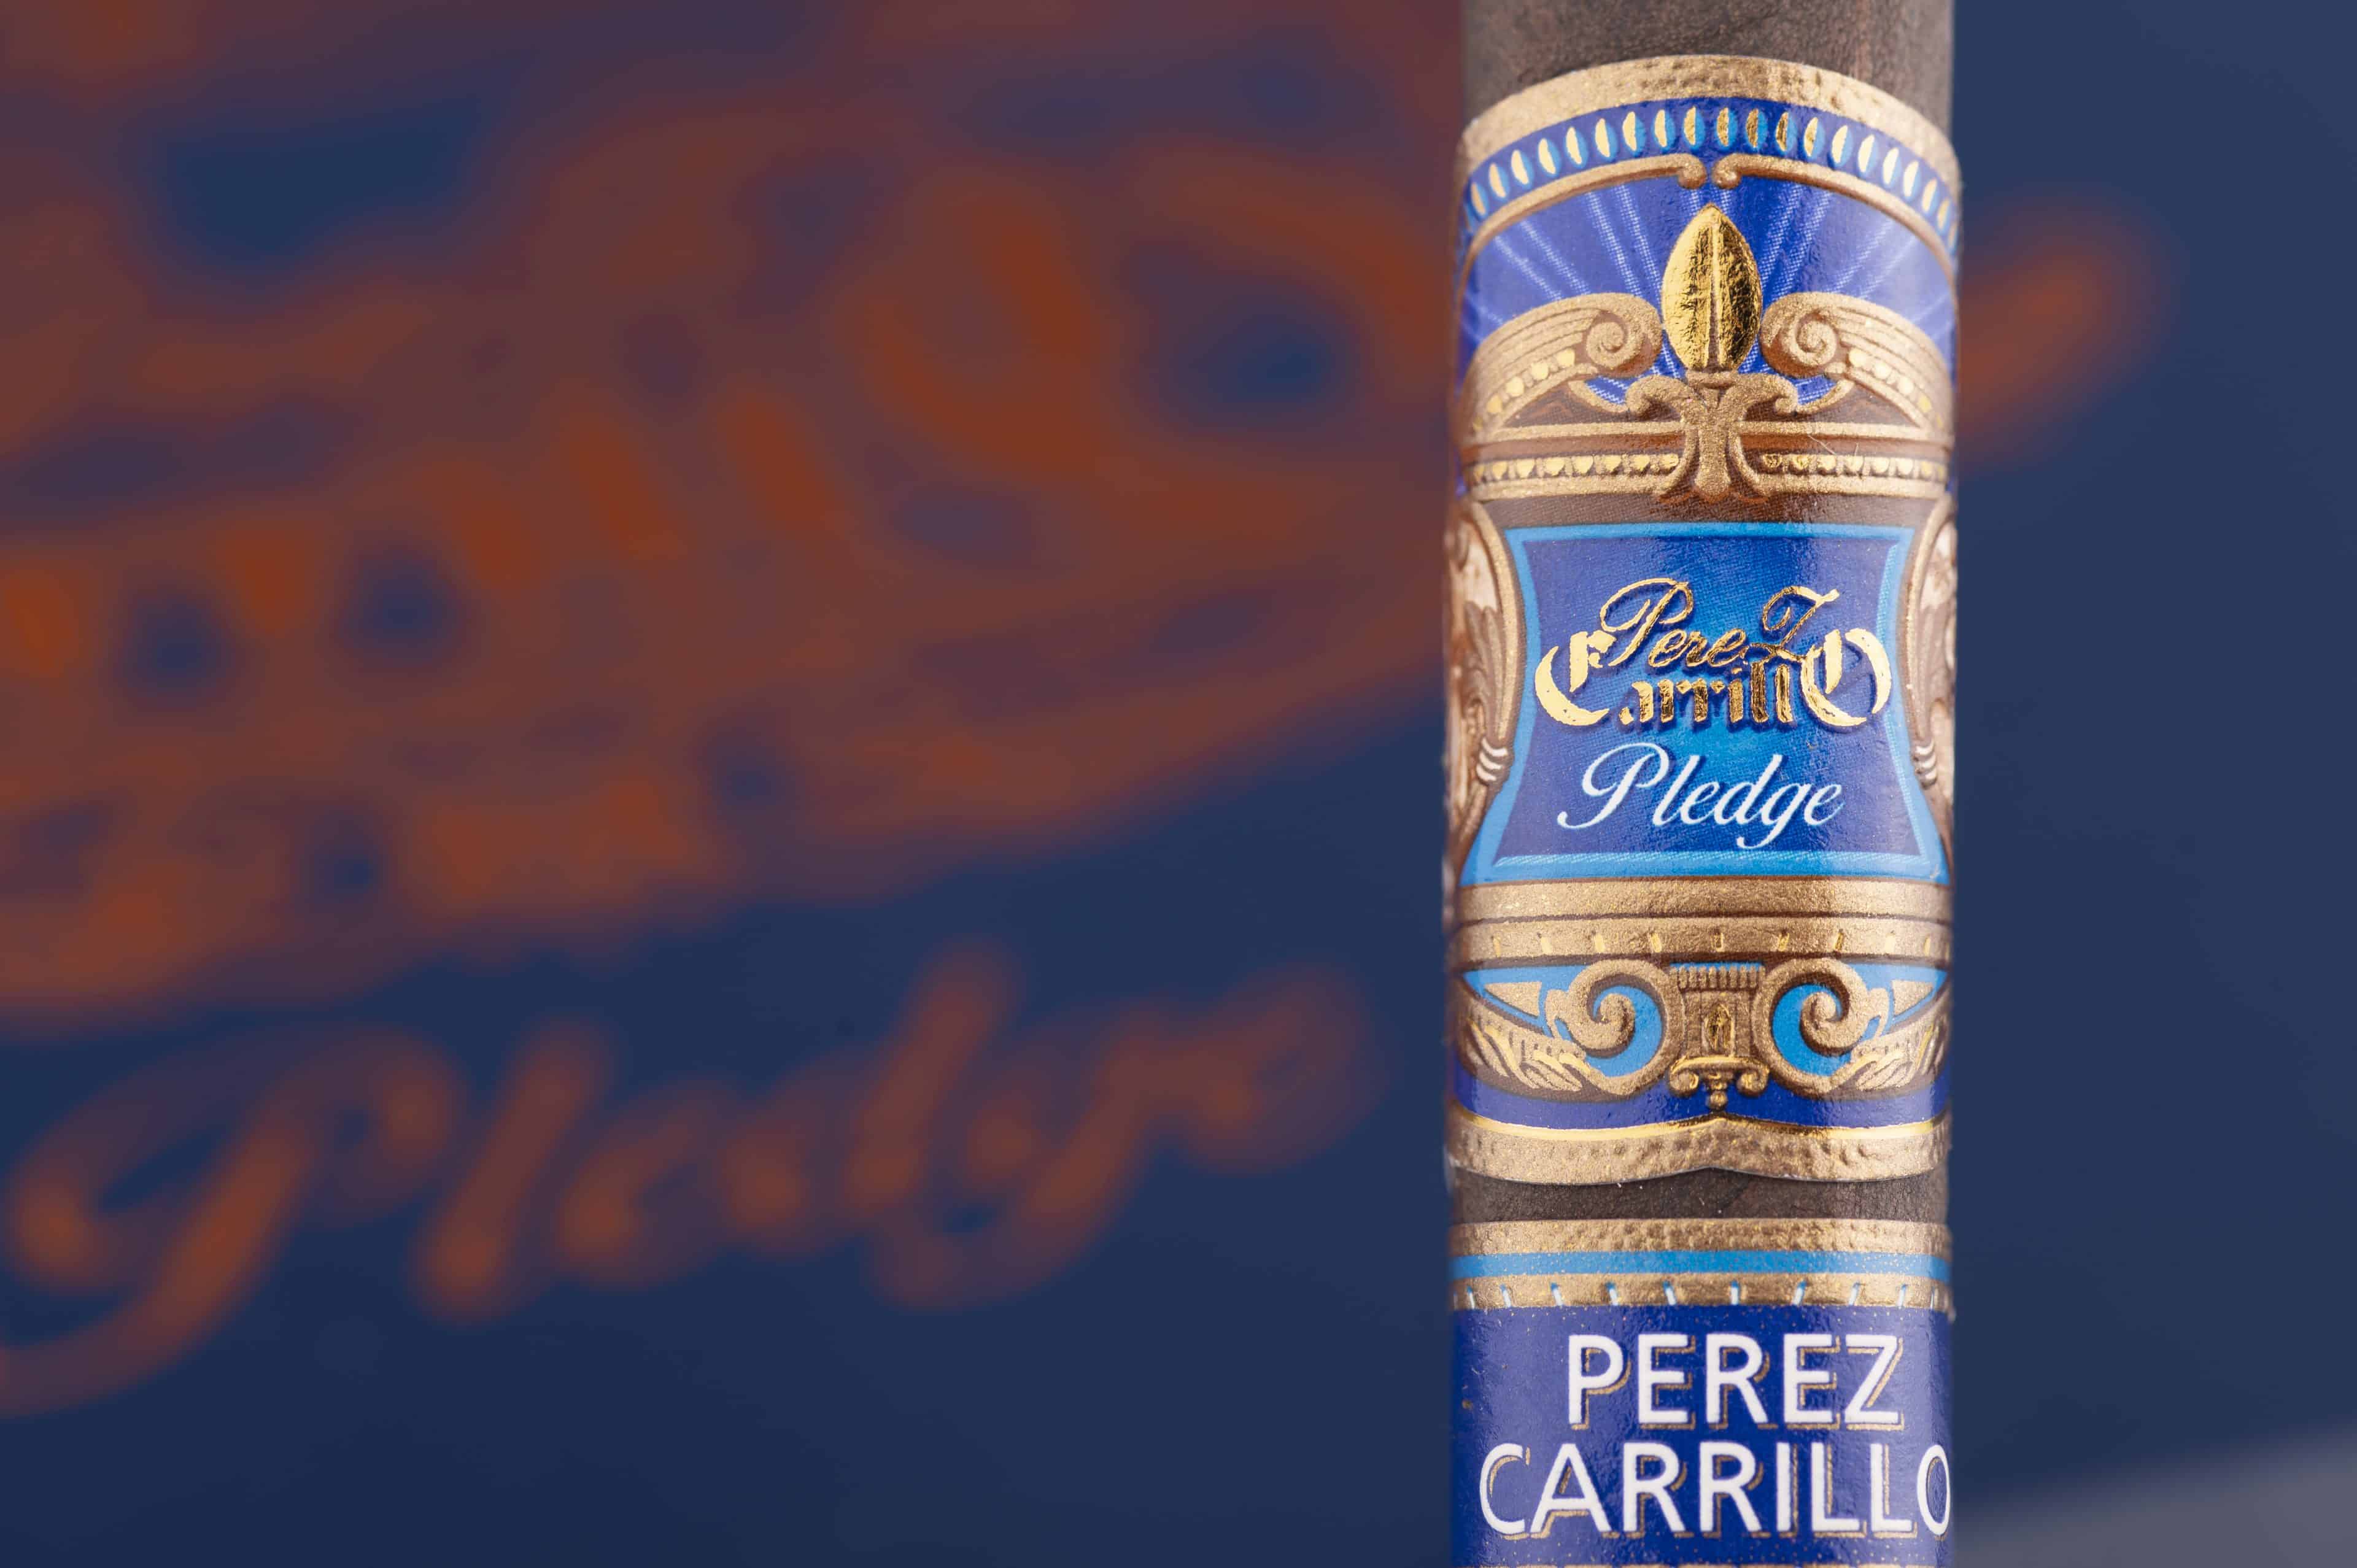 E.P. Carrillo Ships Pledge Lonsdale Limitada - Cigar News